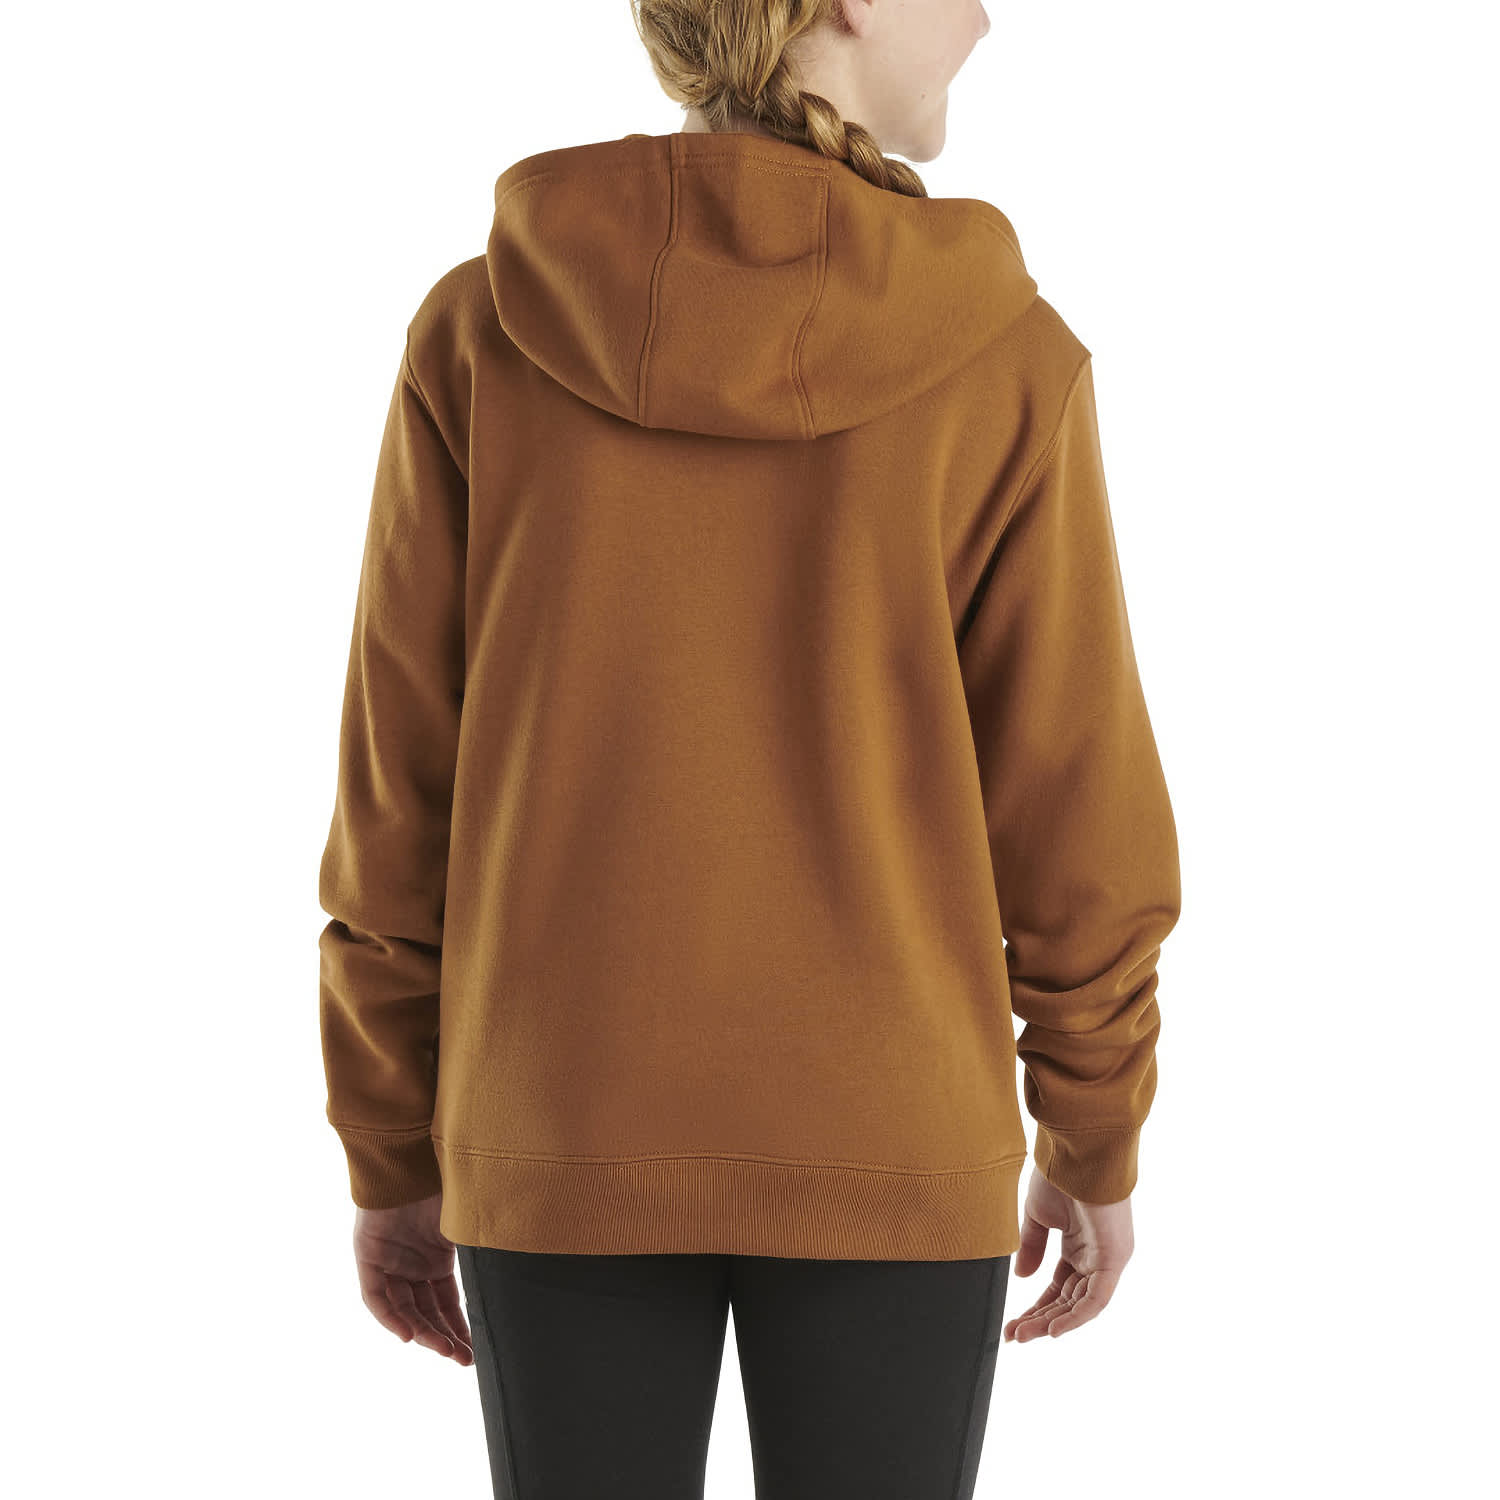 Carhartt® Girls’ Long-Sleeve Graphic Sweatshirt